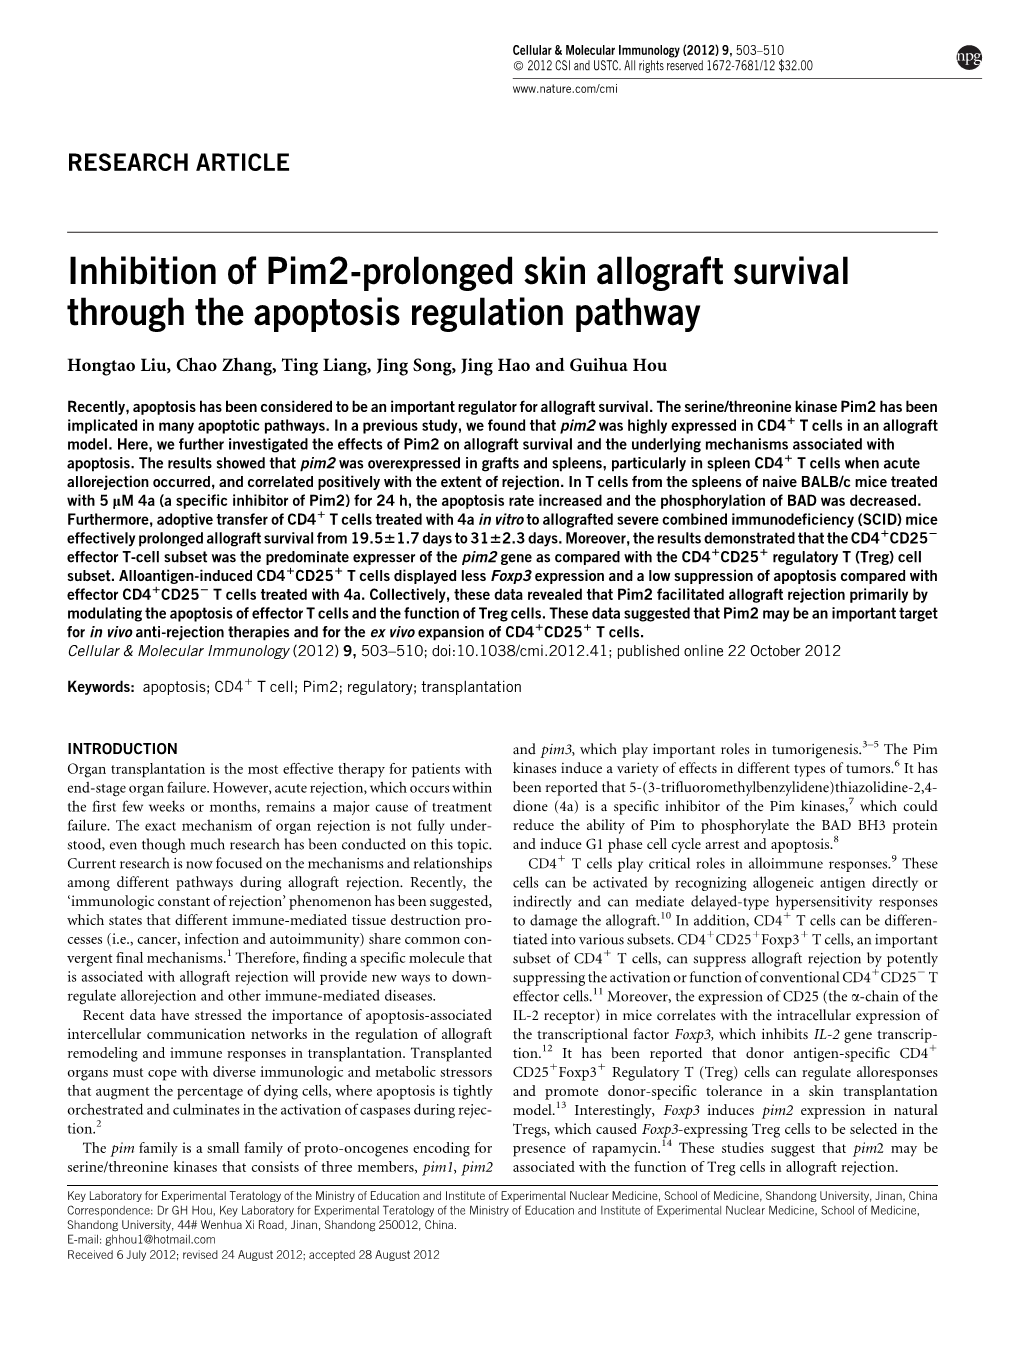 Inhibition of Pim2-Prolonged Skin Allograft Survival Through the Apoptosis Regulation Pathway